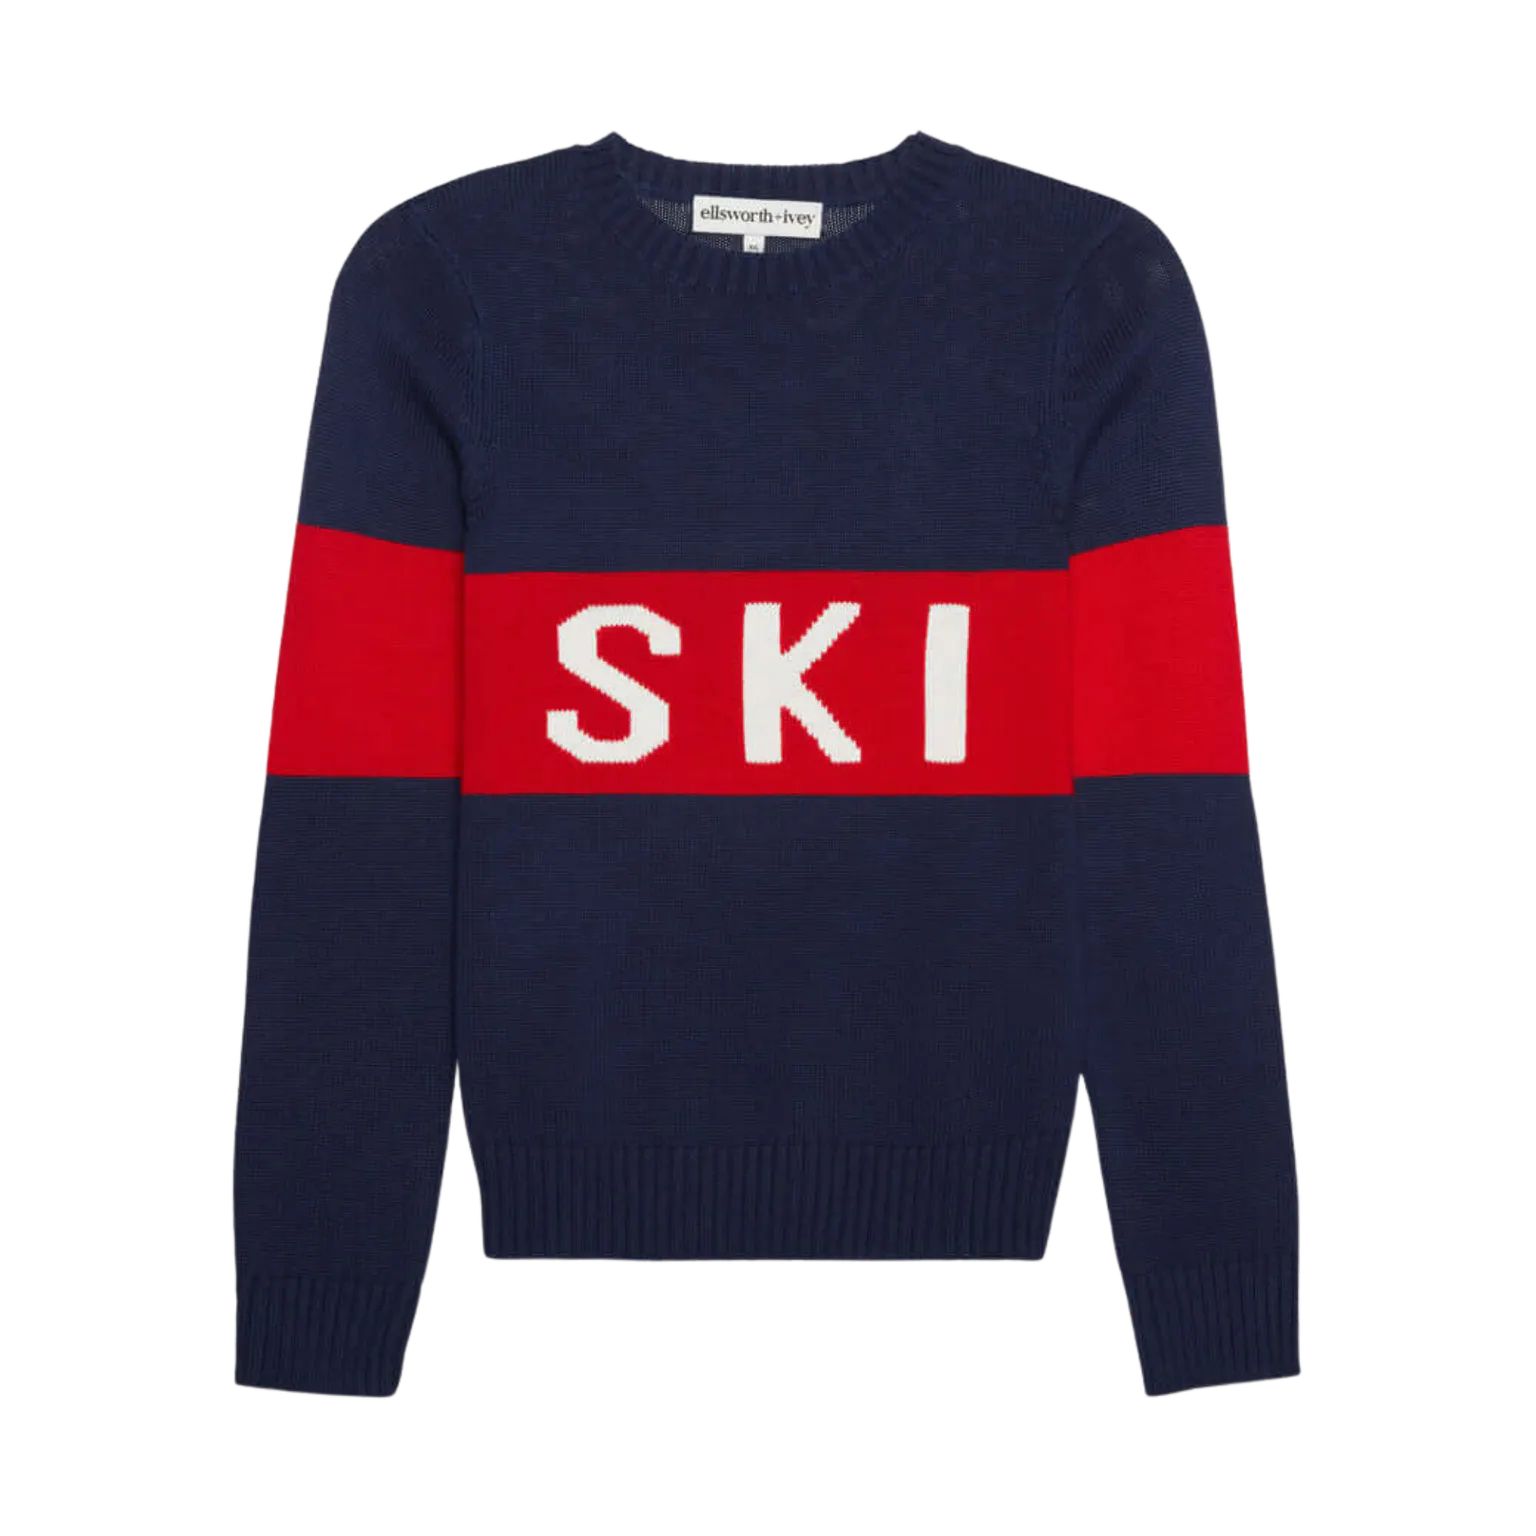 Ellsworth + Ivey Navy Block SKI Sweater | Verishop